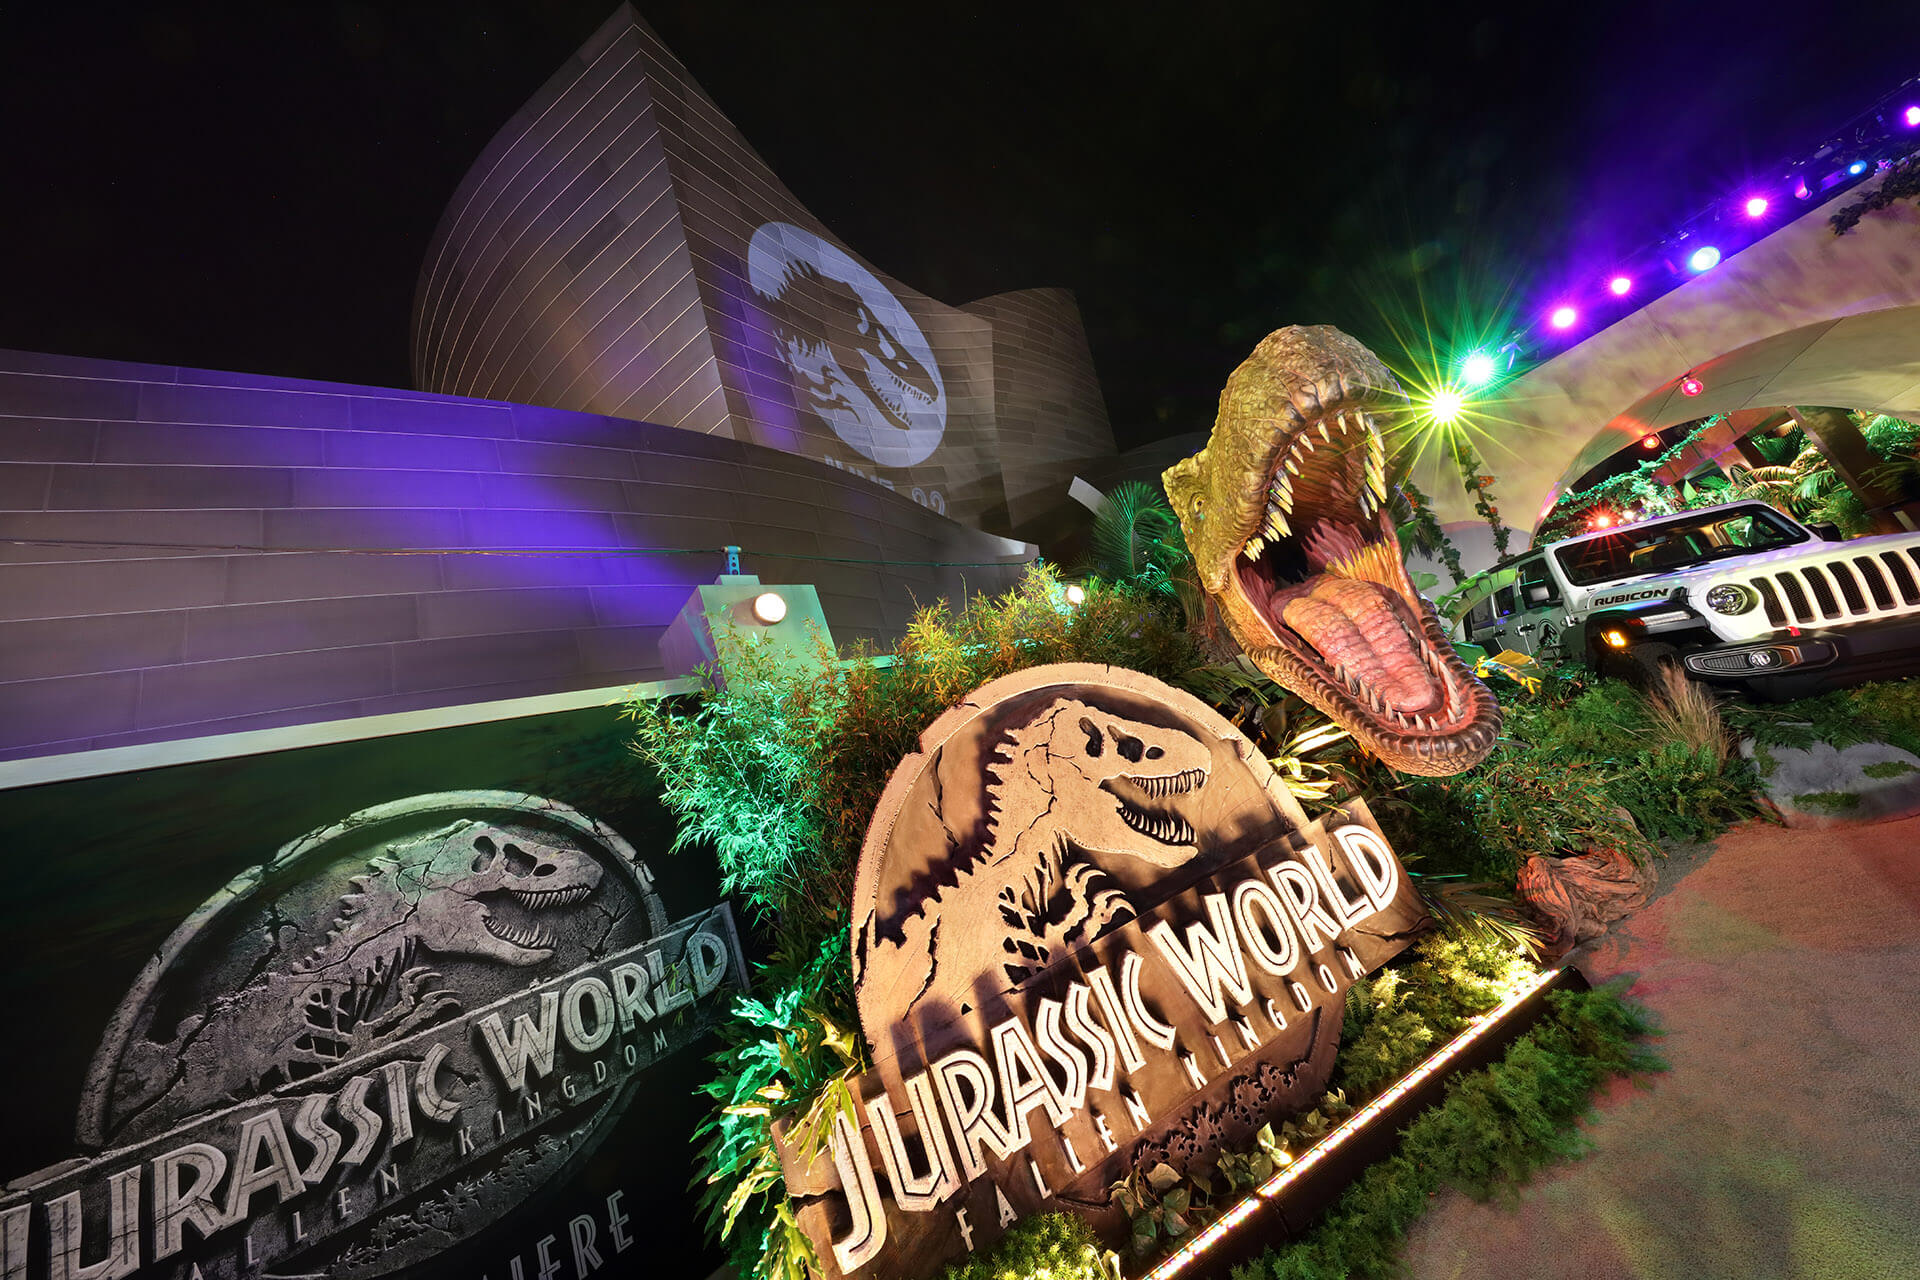 Jurassic World Fallen Kingdom Movie Premiere Los Angeles JG2 Collective